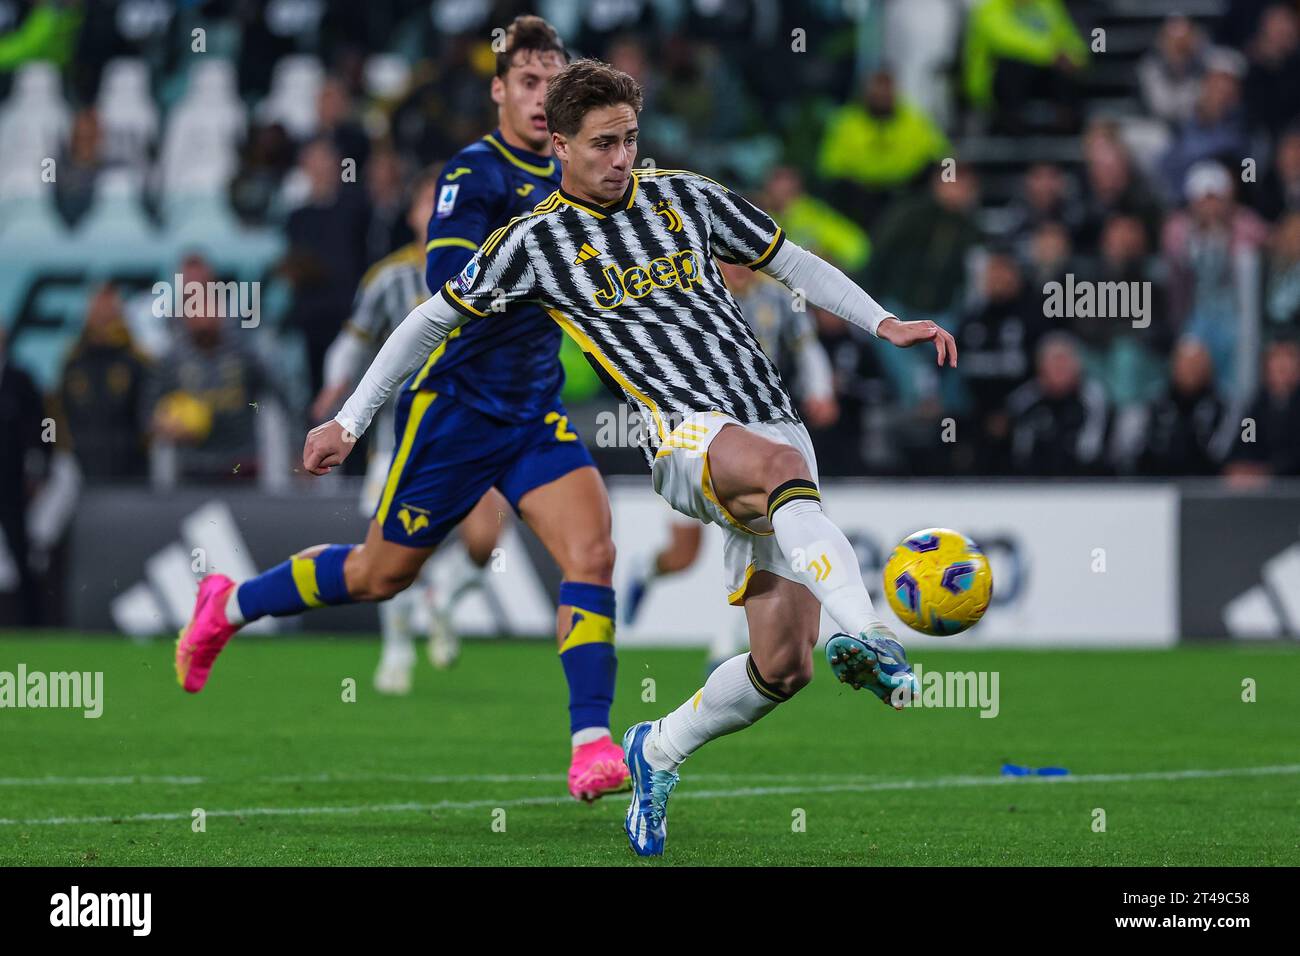 Kenan Yildiz of Juventus FC in action during the Serie A football match  between Atalanta BC and Juventus FC Stock Photo - Alamy